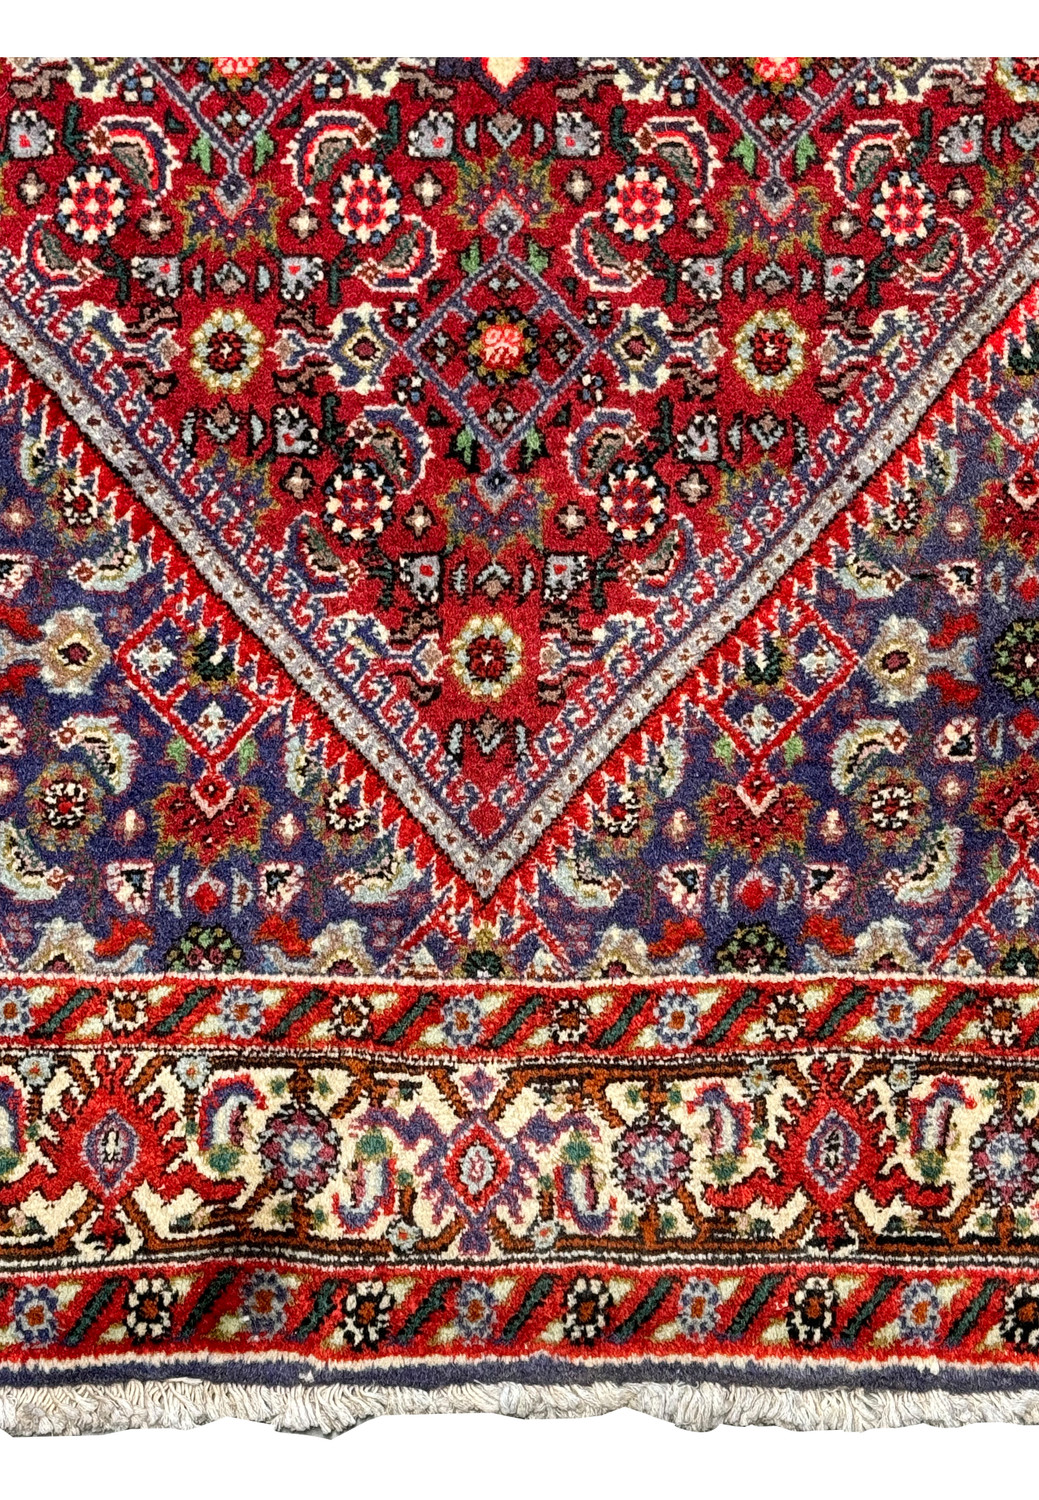 A corner view of a Persian Bijar rug highlighting the border designs and fringe. Colors: Navy blue, crimson red, ivory, forest green, beige, light blue, black, orange, pink.